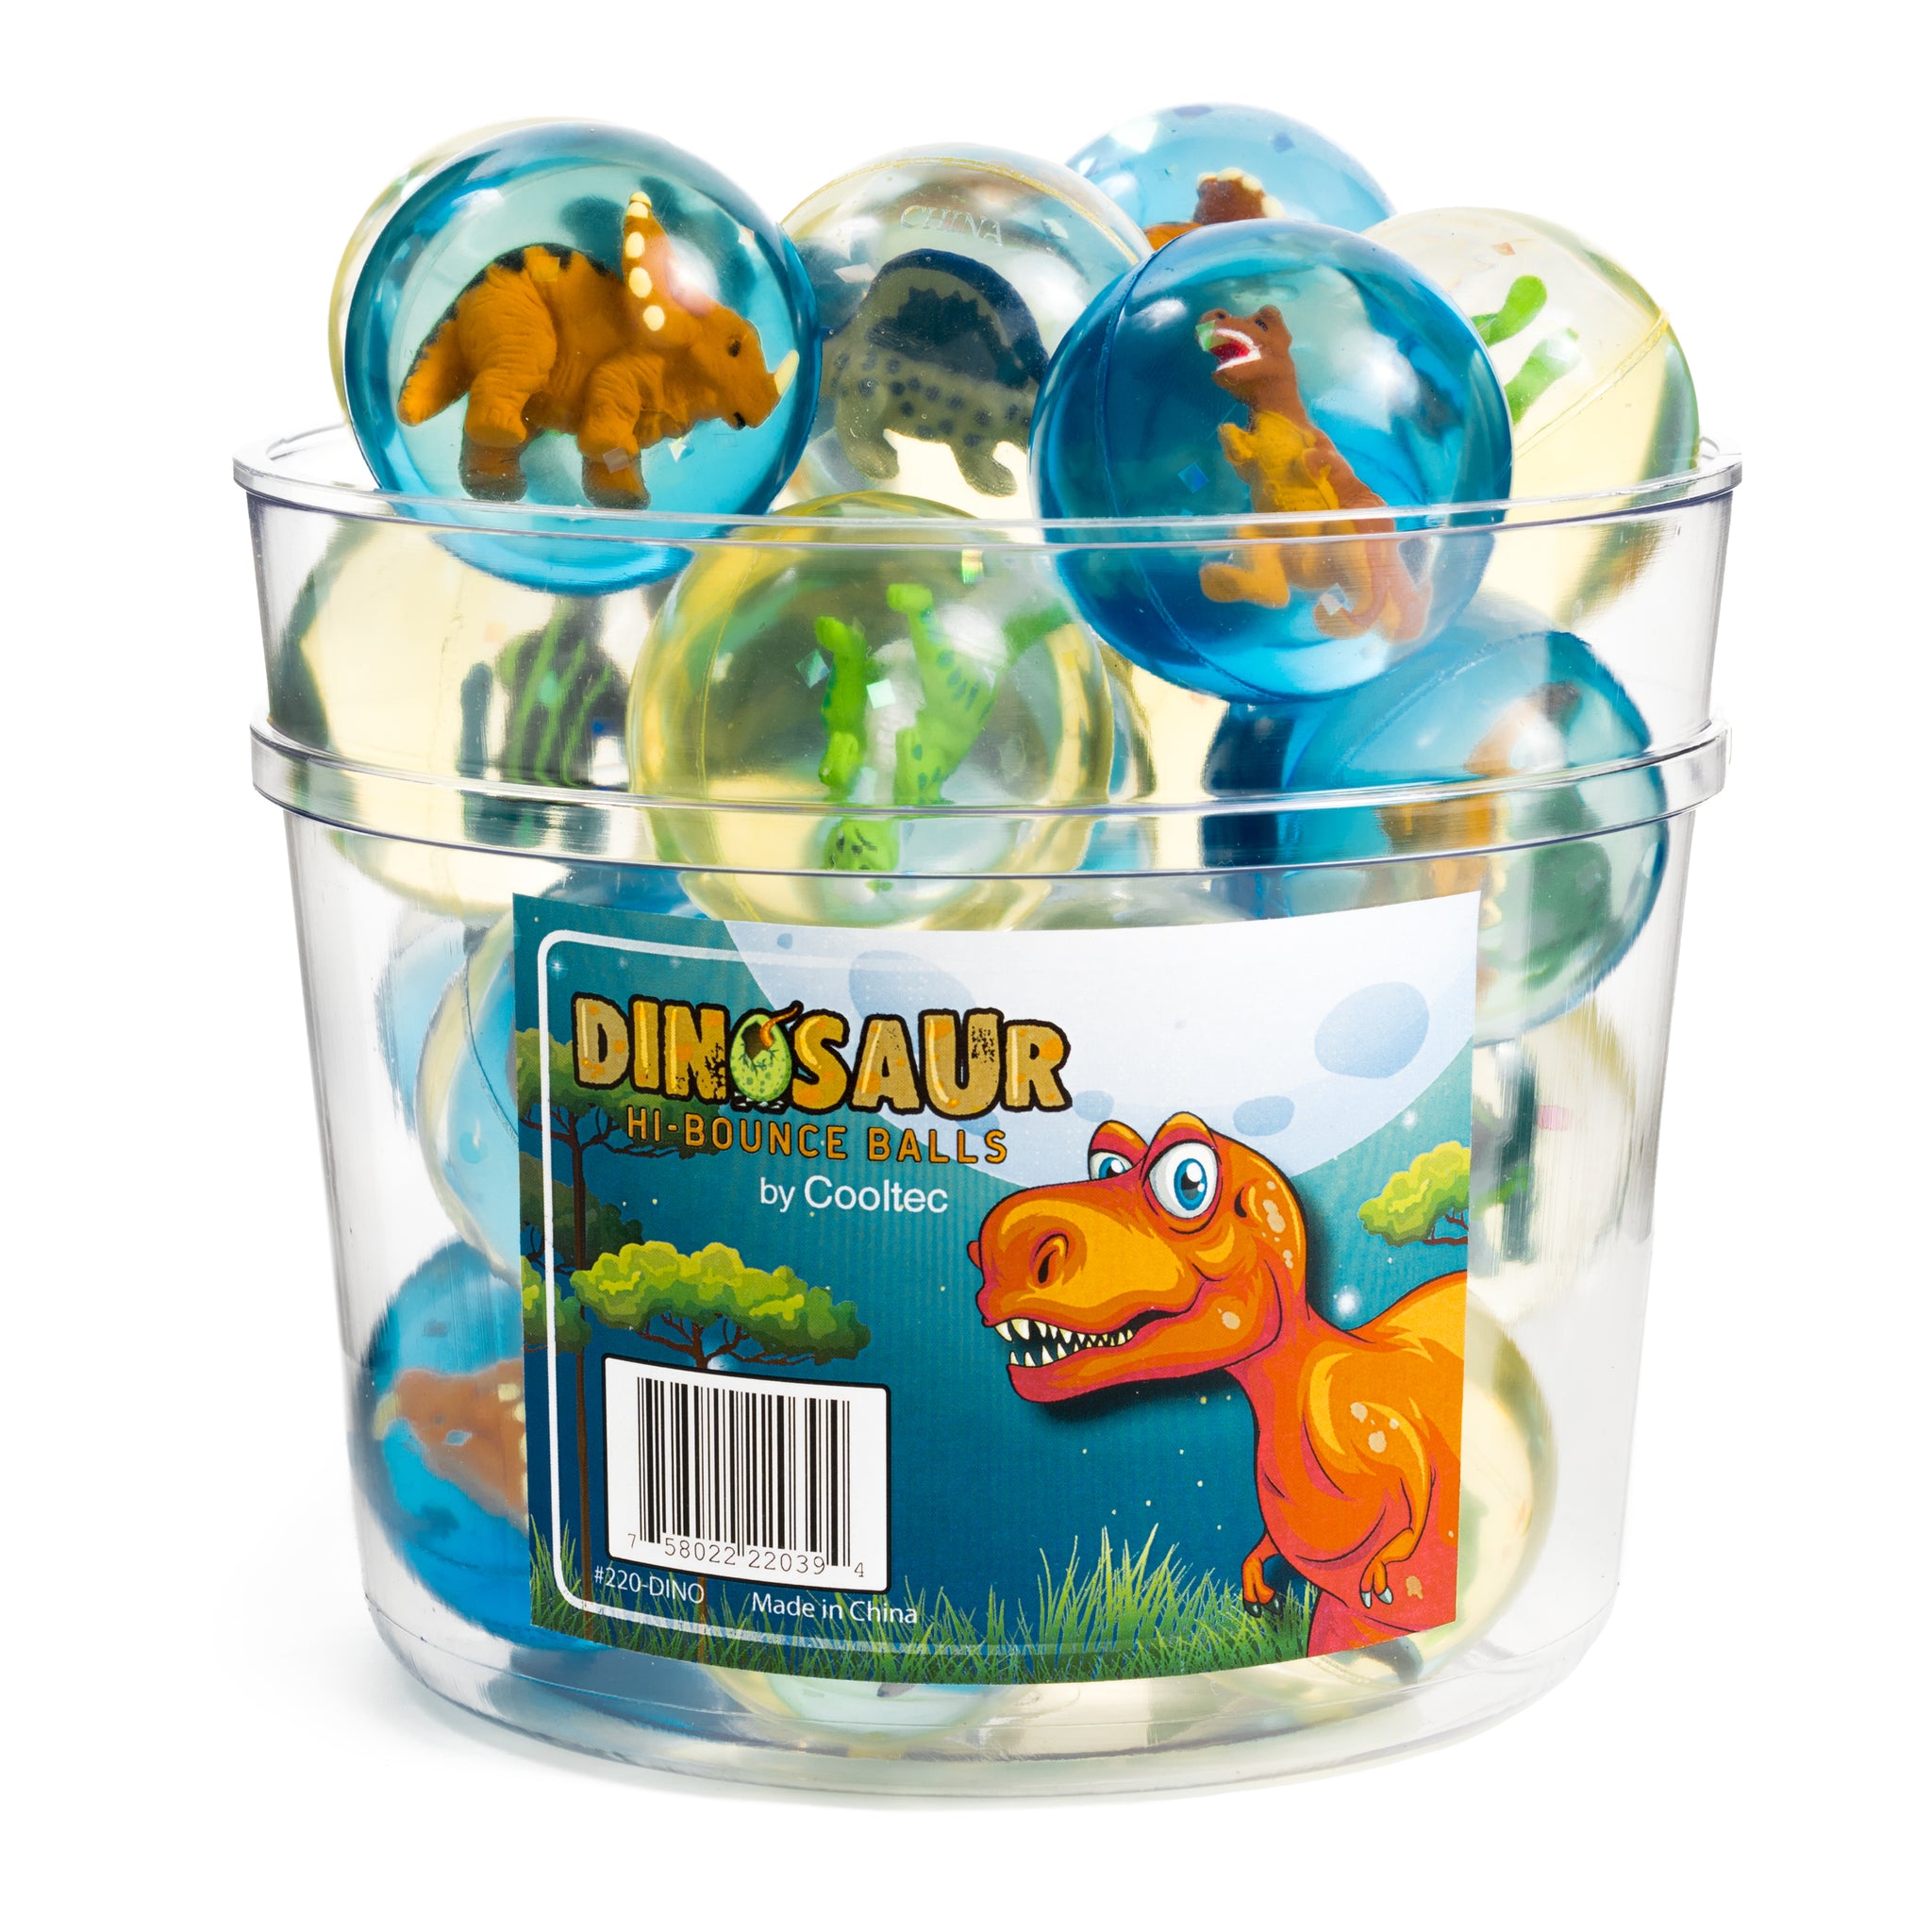 Dinosaur High Bounce Ball (24 pc DISPLAY)